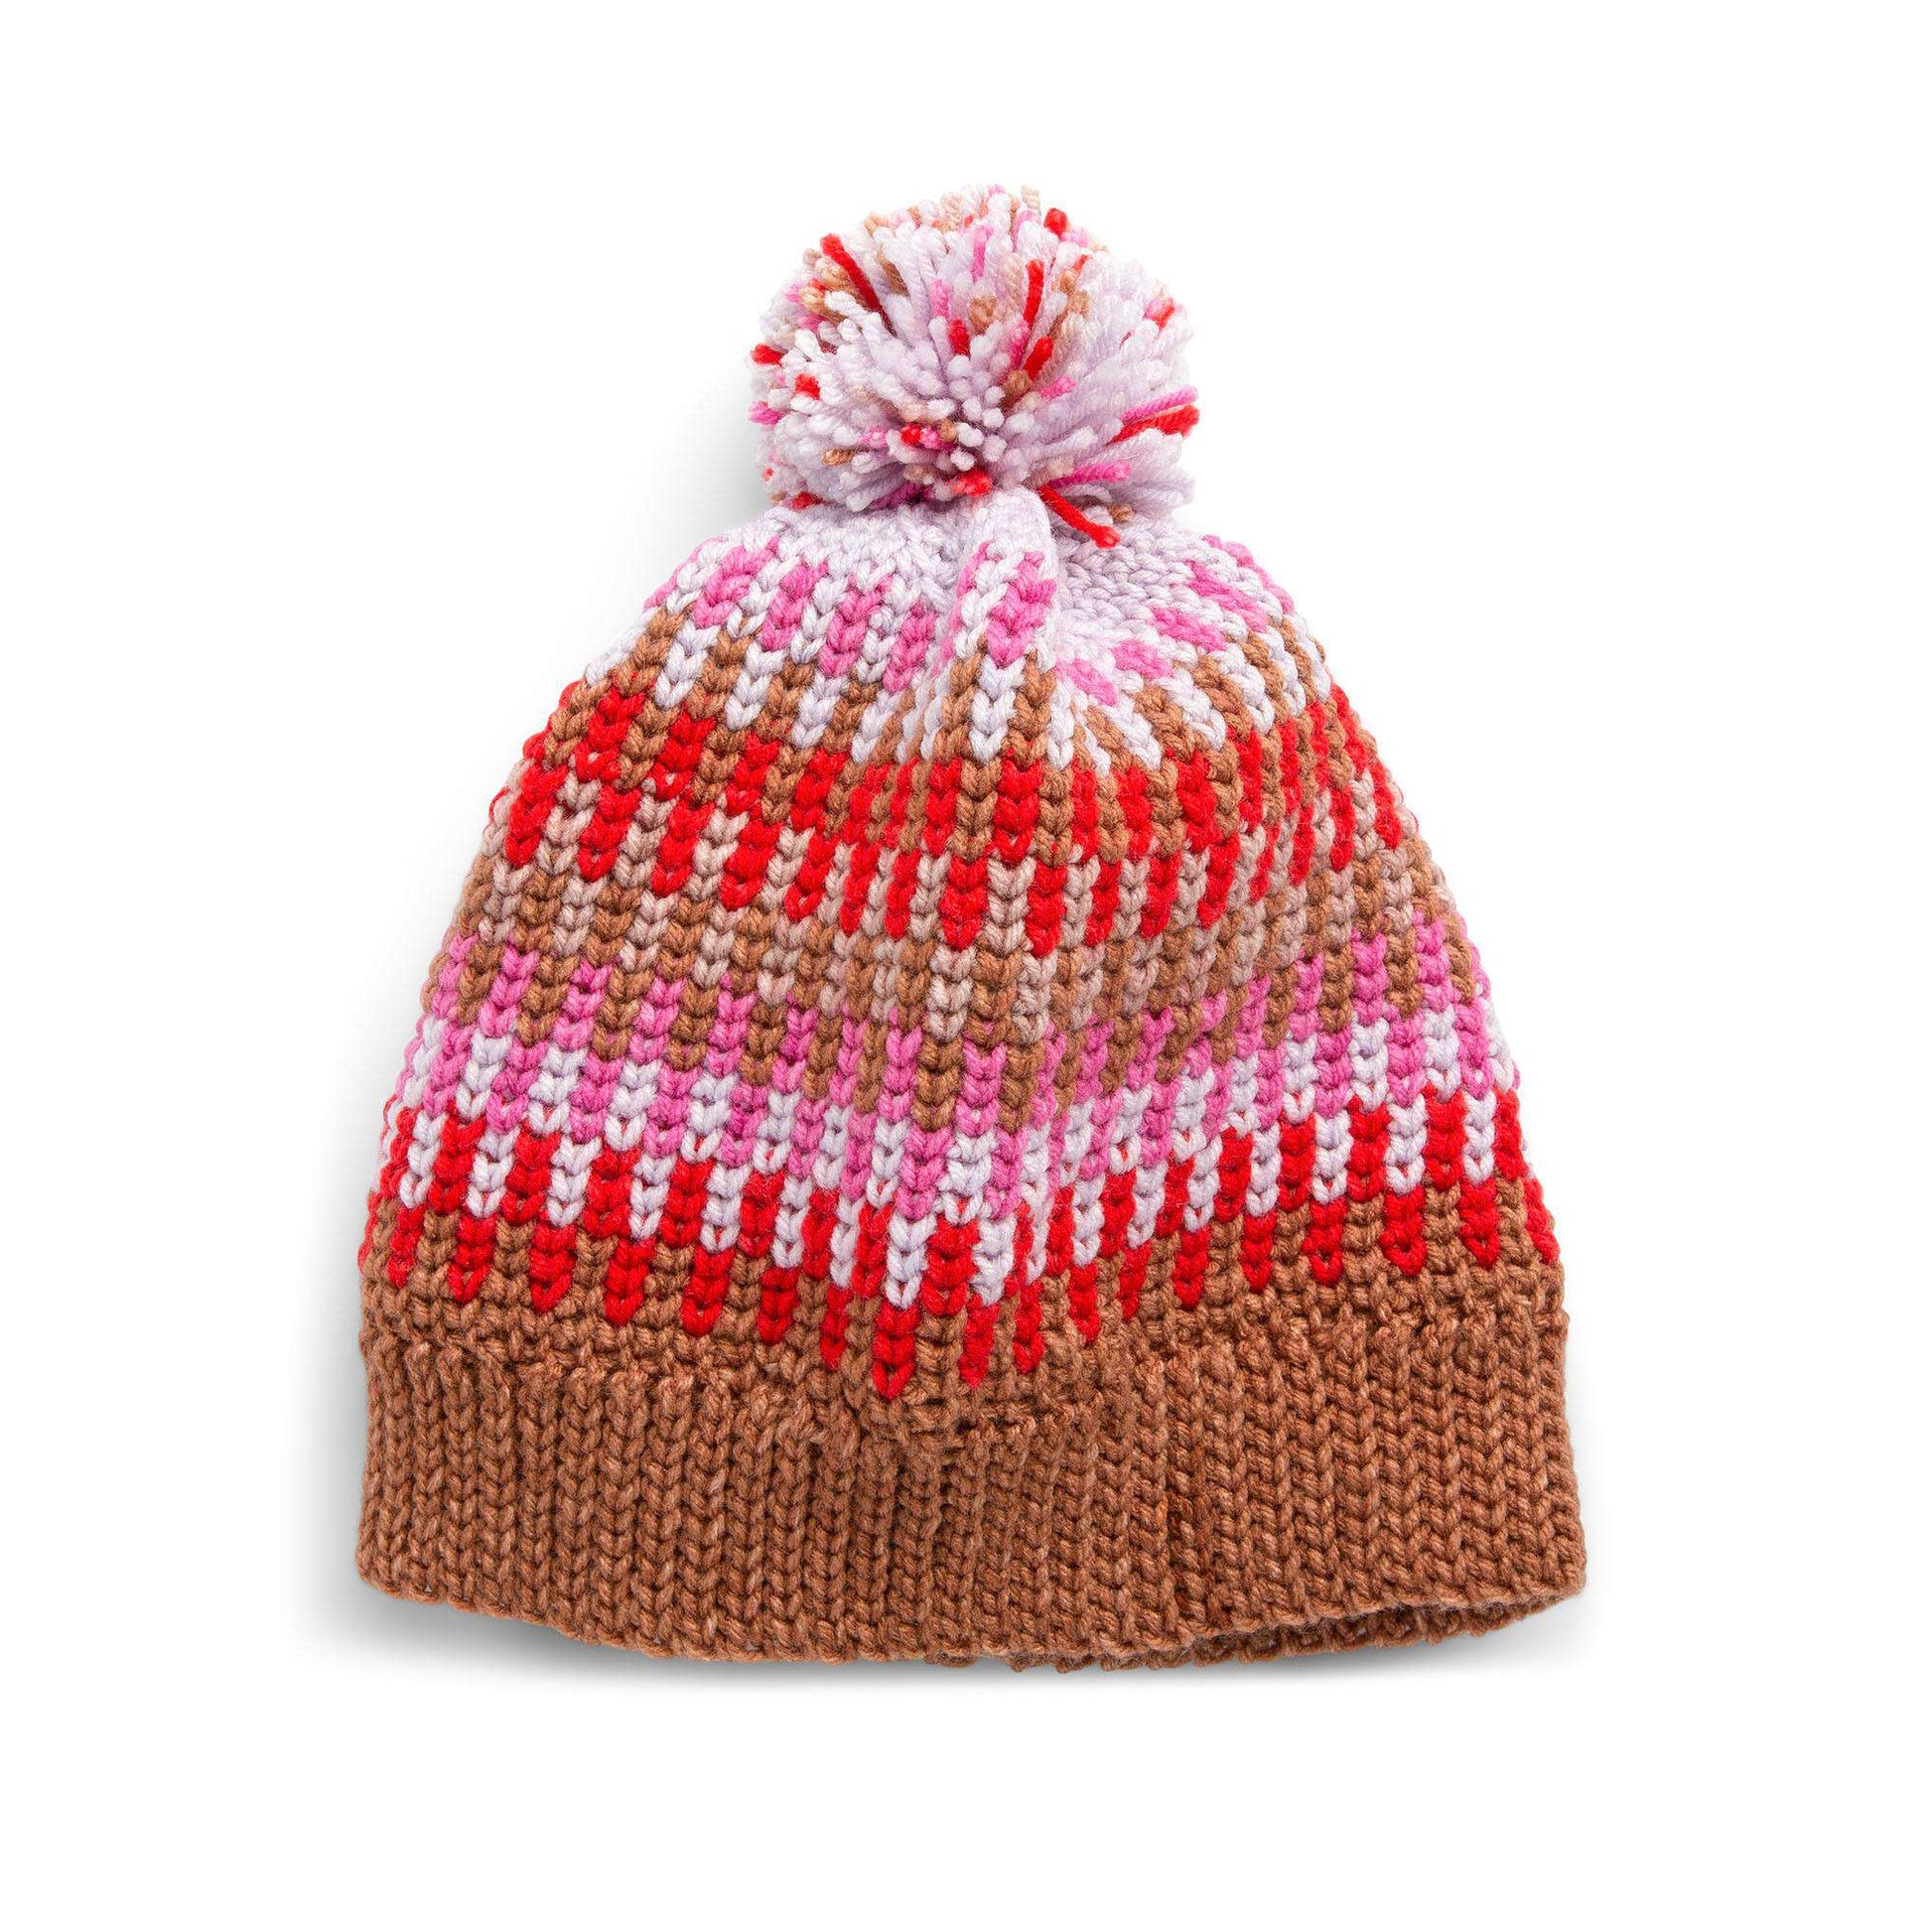 Caron Nordic Crochet Hat Single Size